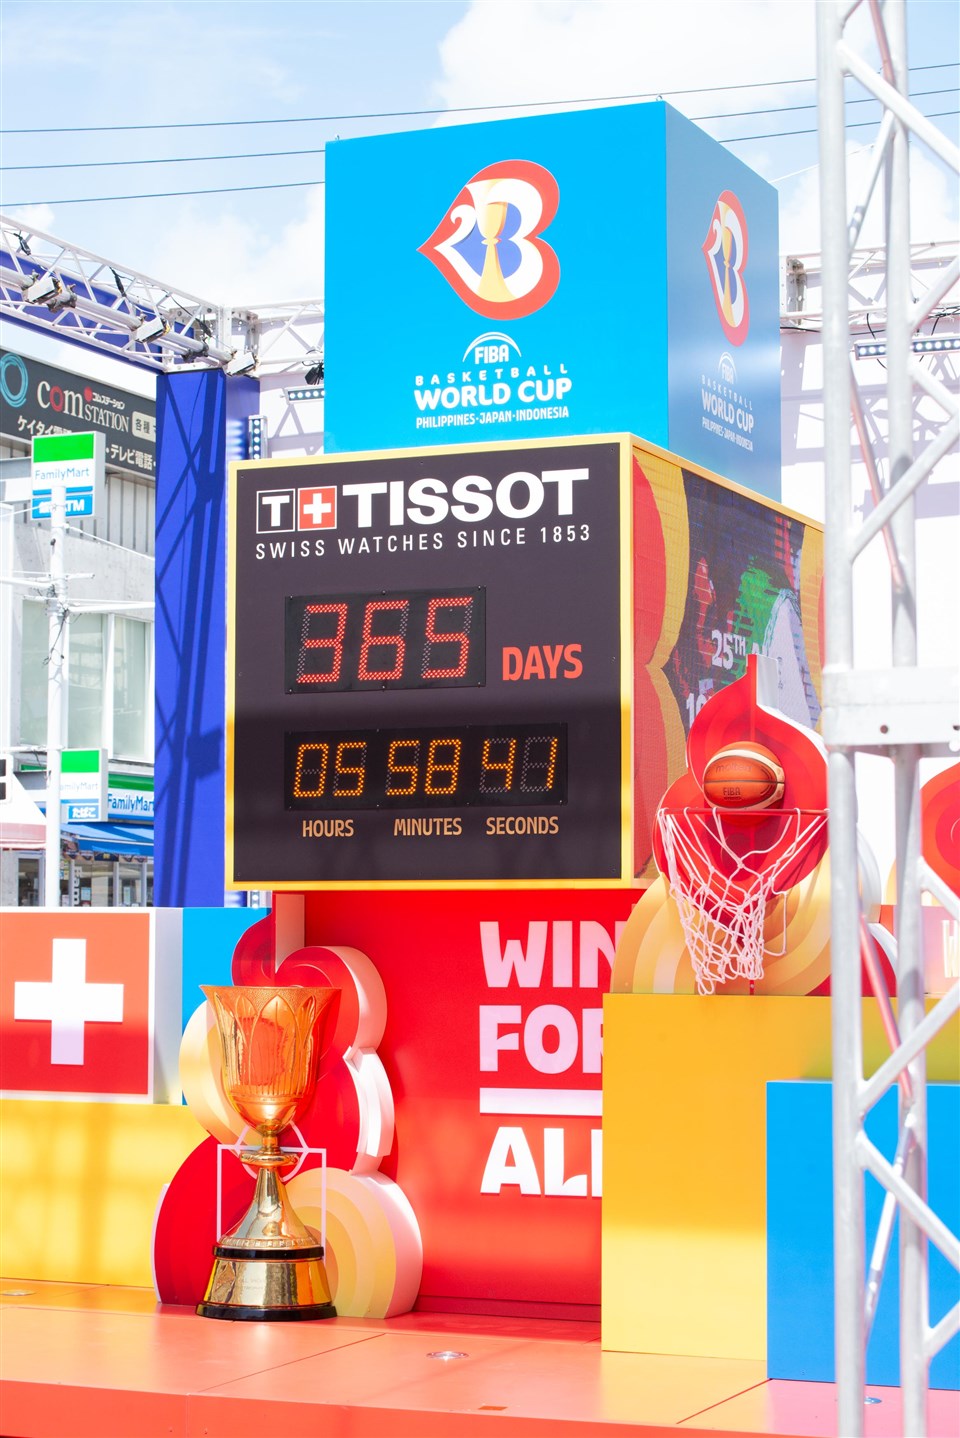 Fiba keeps time with Tissot until 2027 - Sportcal